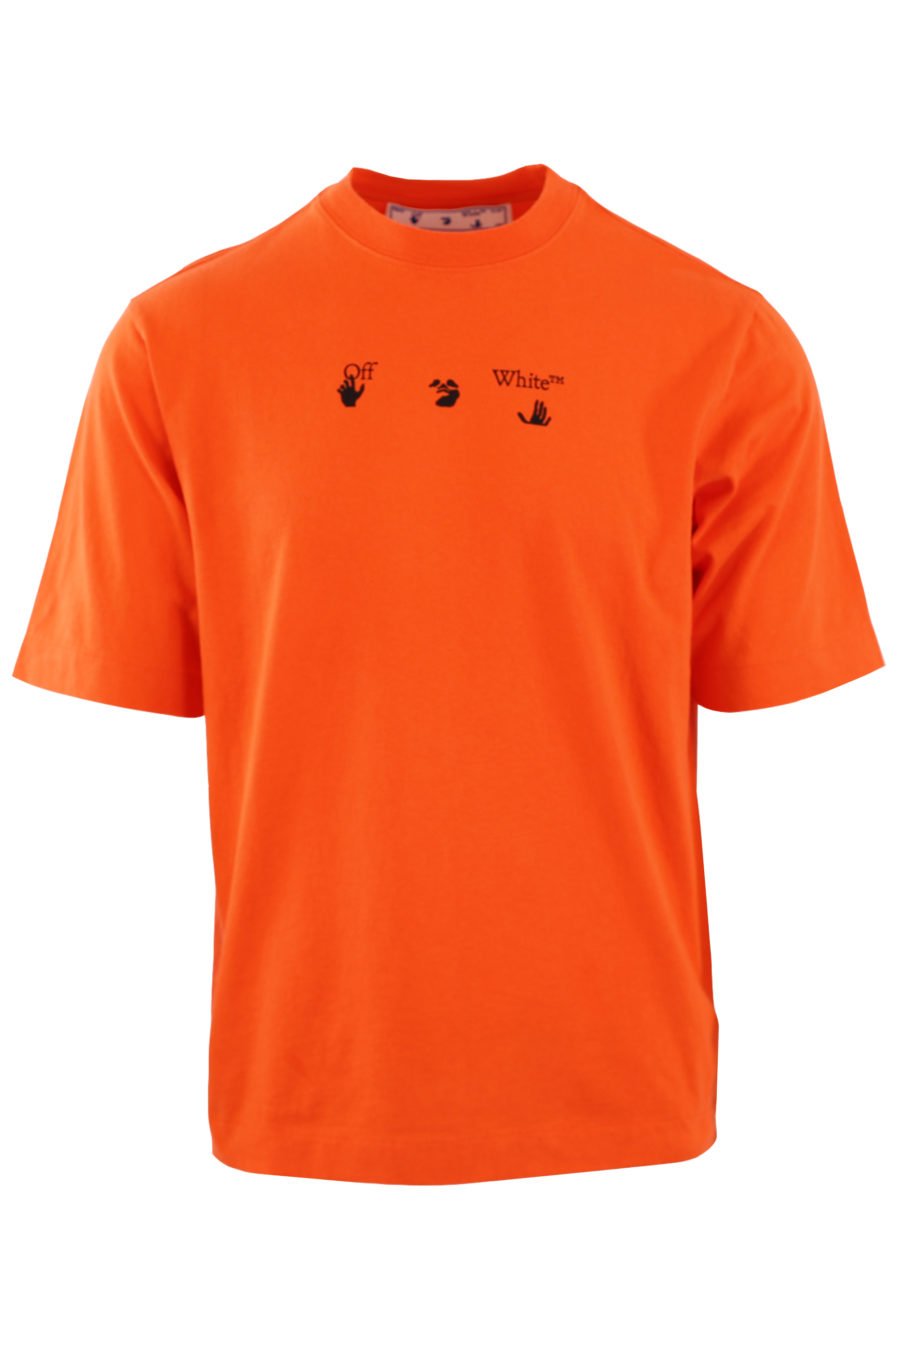 Camiseta naranja con logo bordado "Arrows" - IMG1 9208